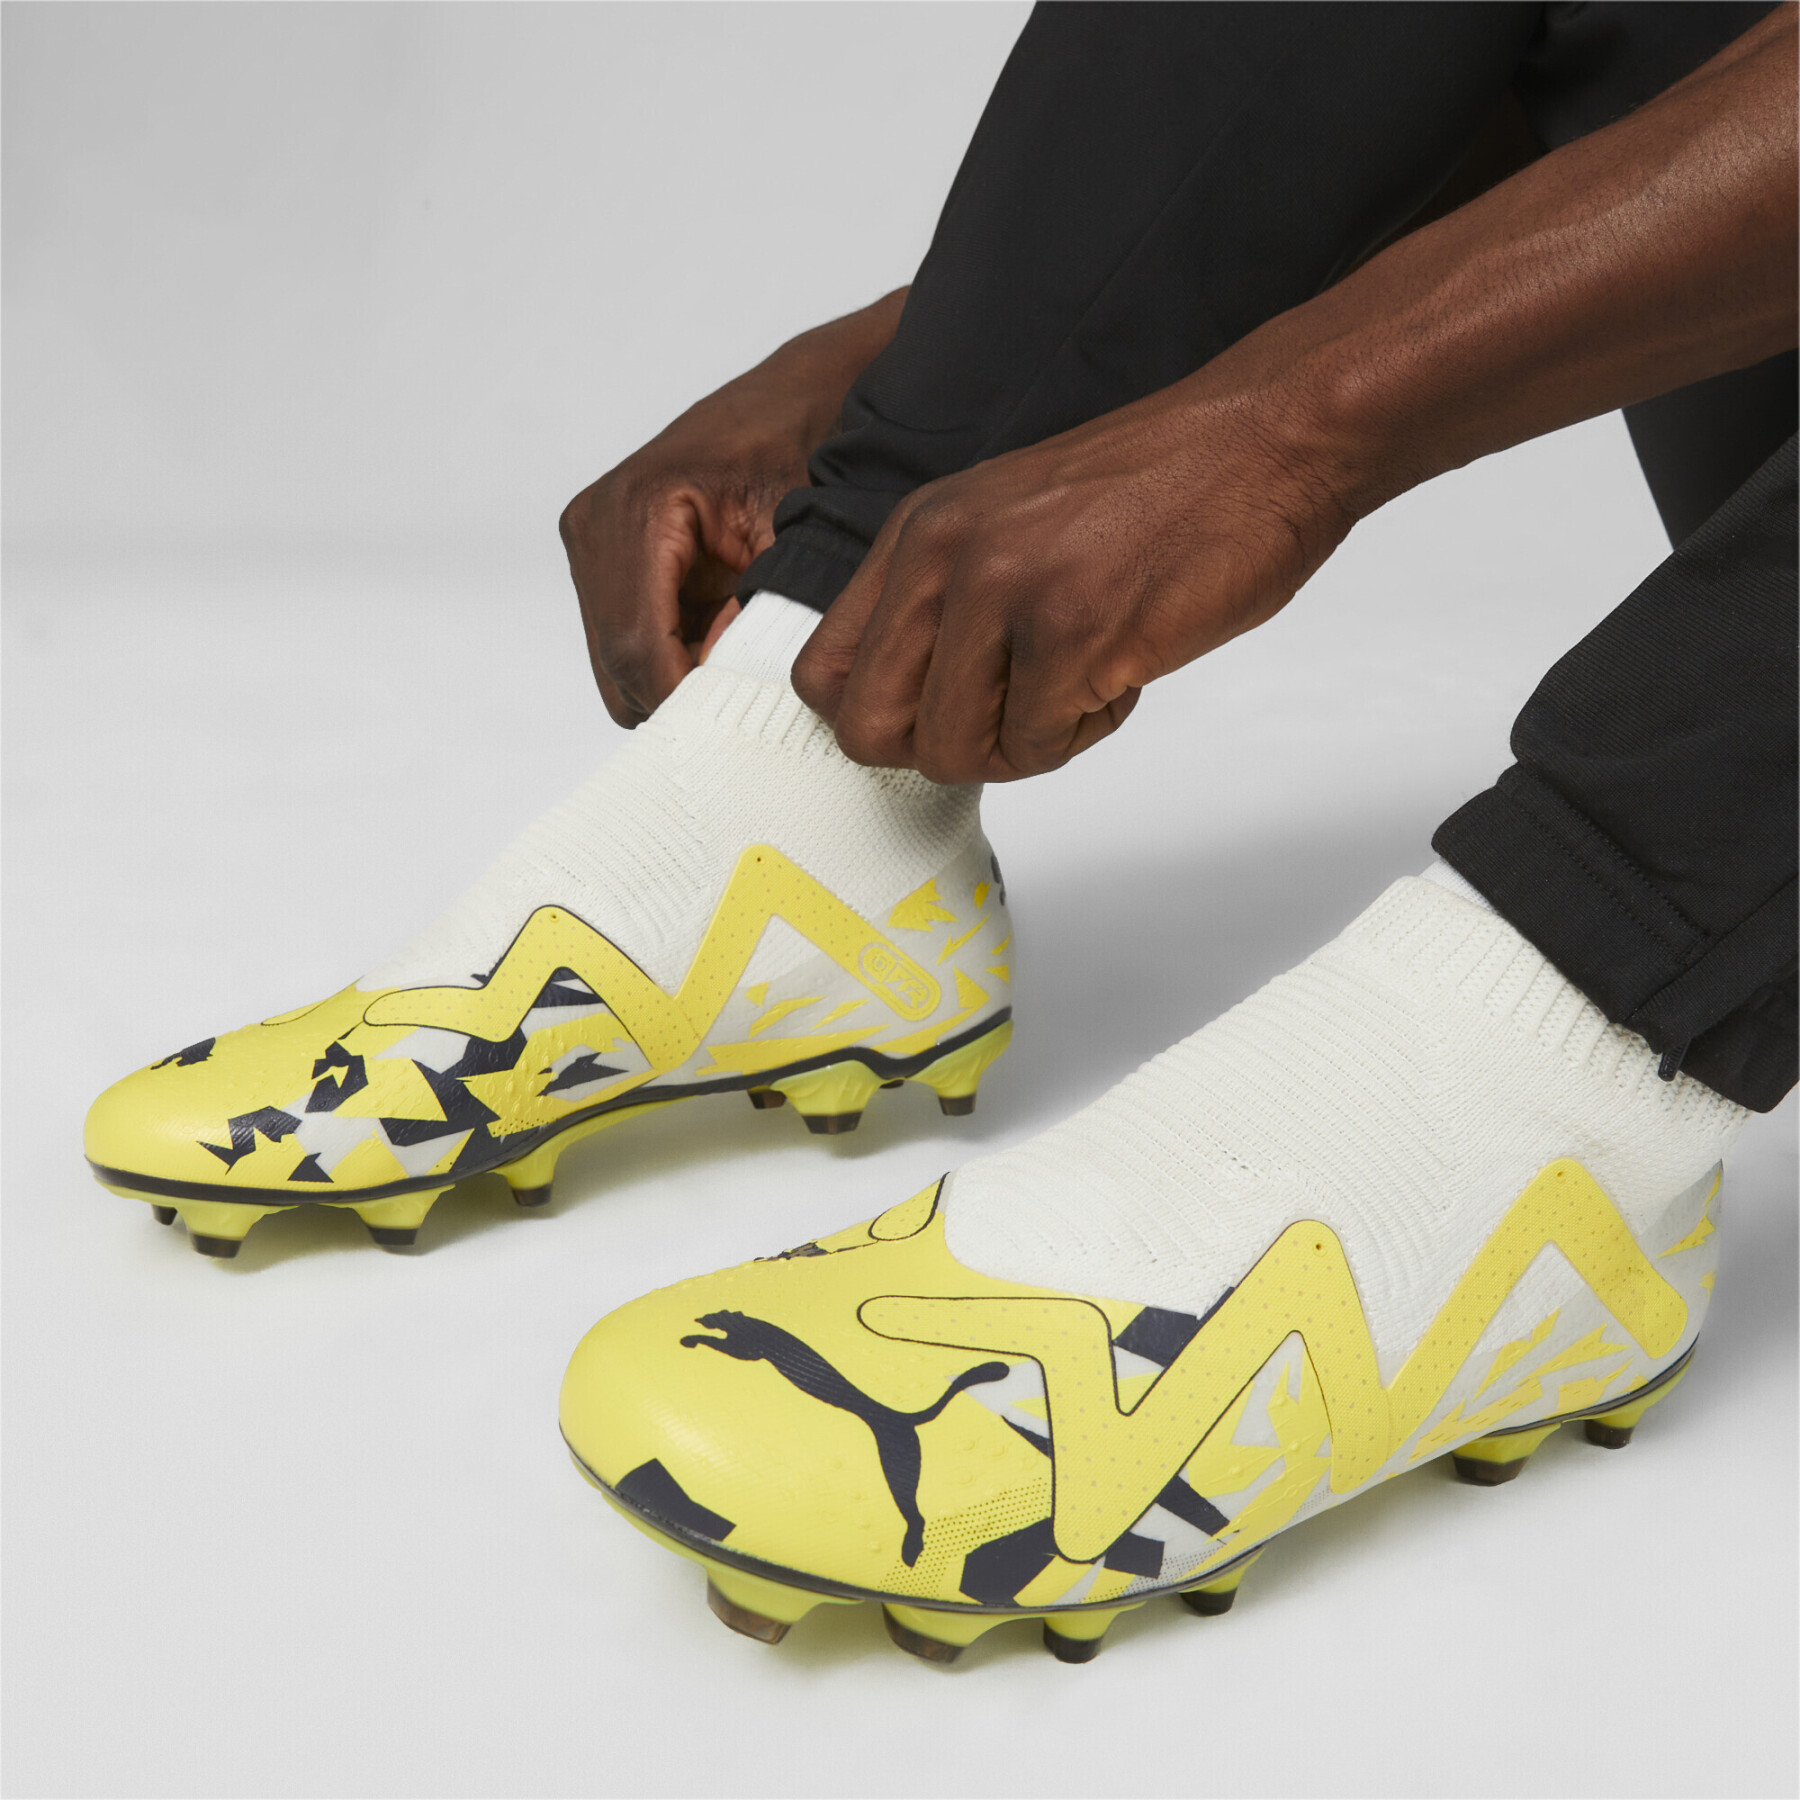 Soccer shoes Puma Future Match+ LL FG/AG - Voltage Pack